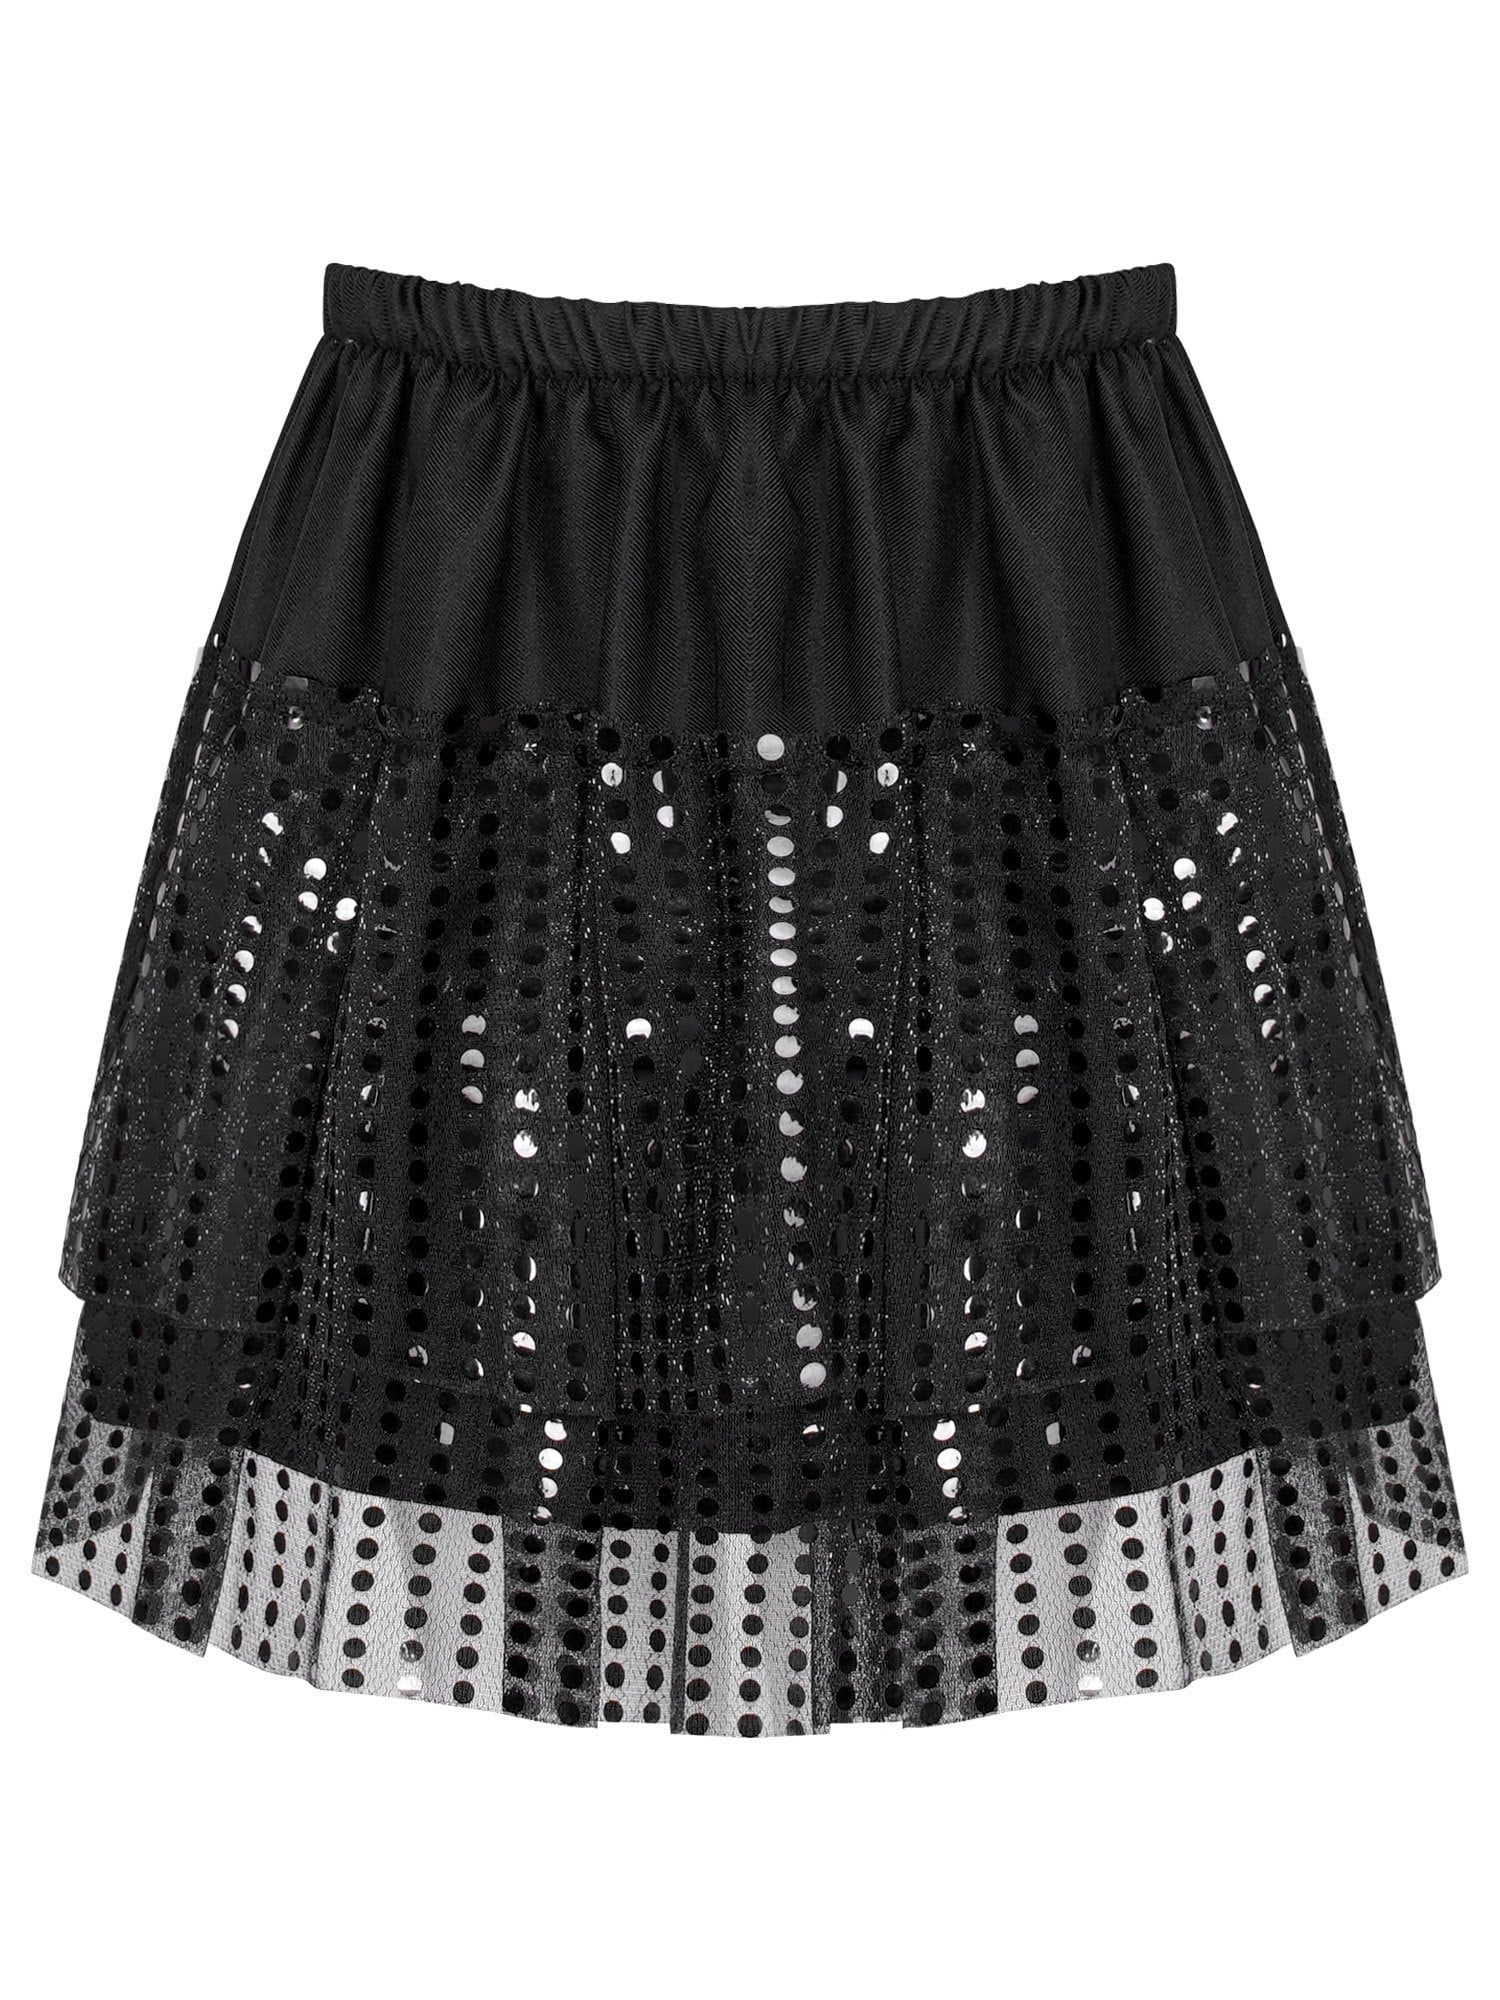 DPOIS Kids Girls Glittery Sequined Dance Tutu Skirt Black 2-3 - Walmart.com